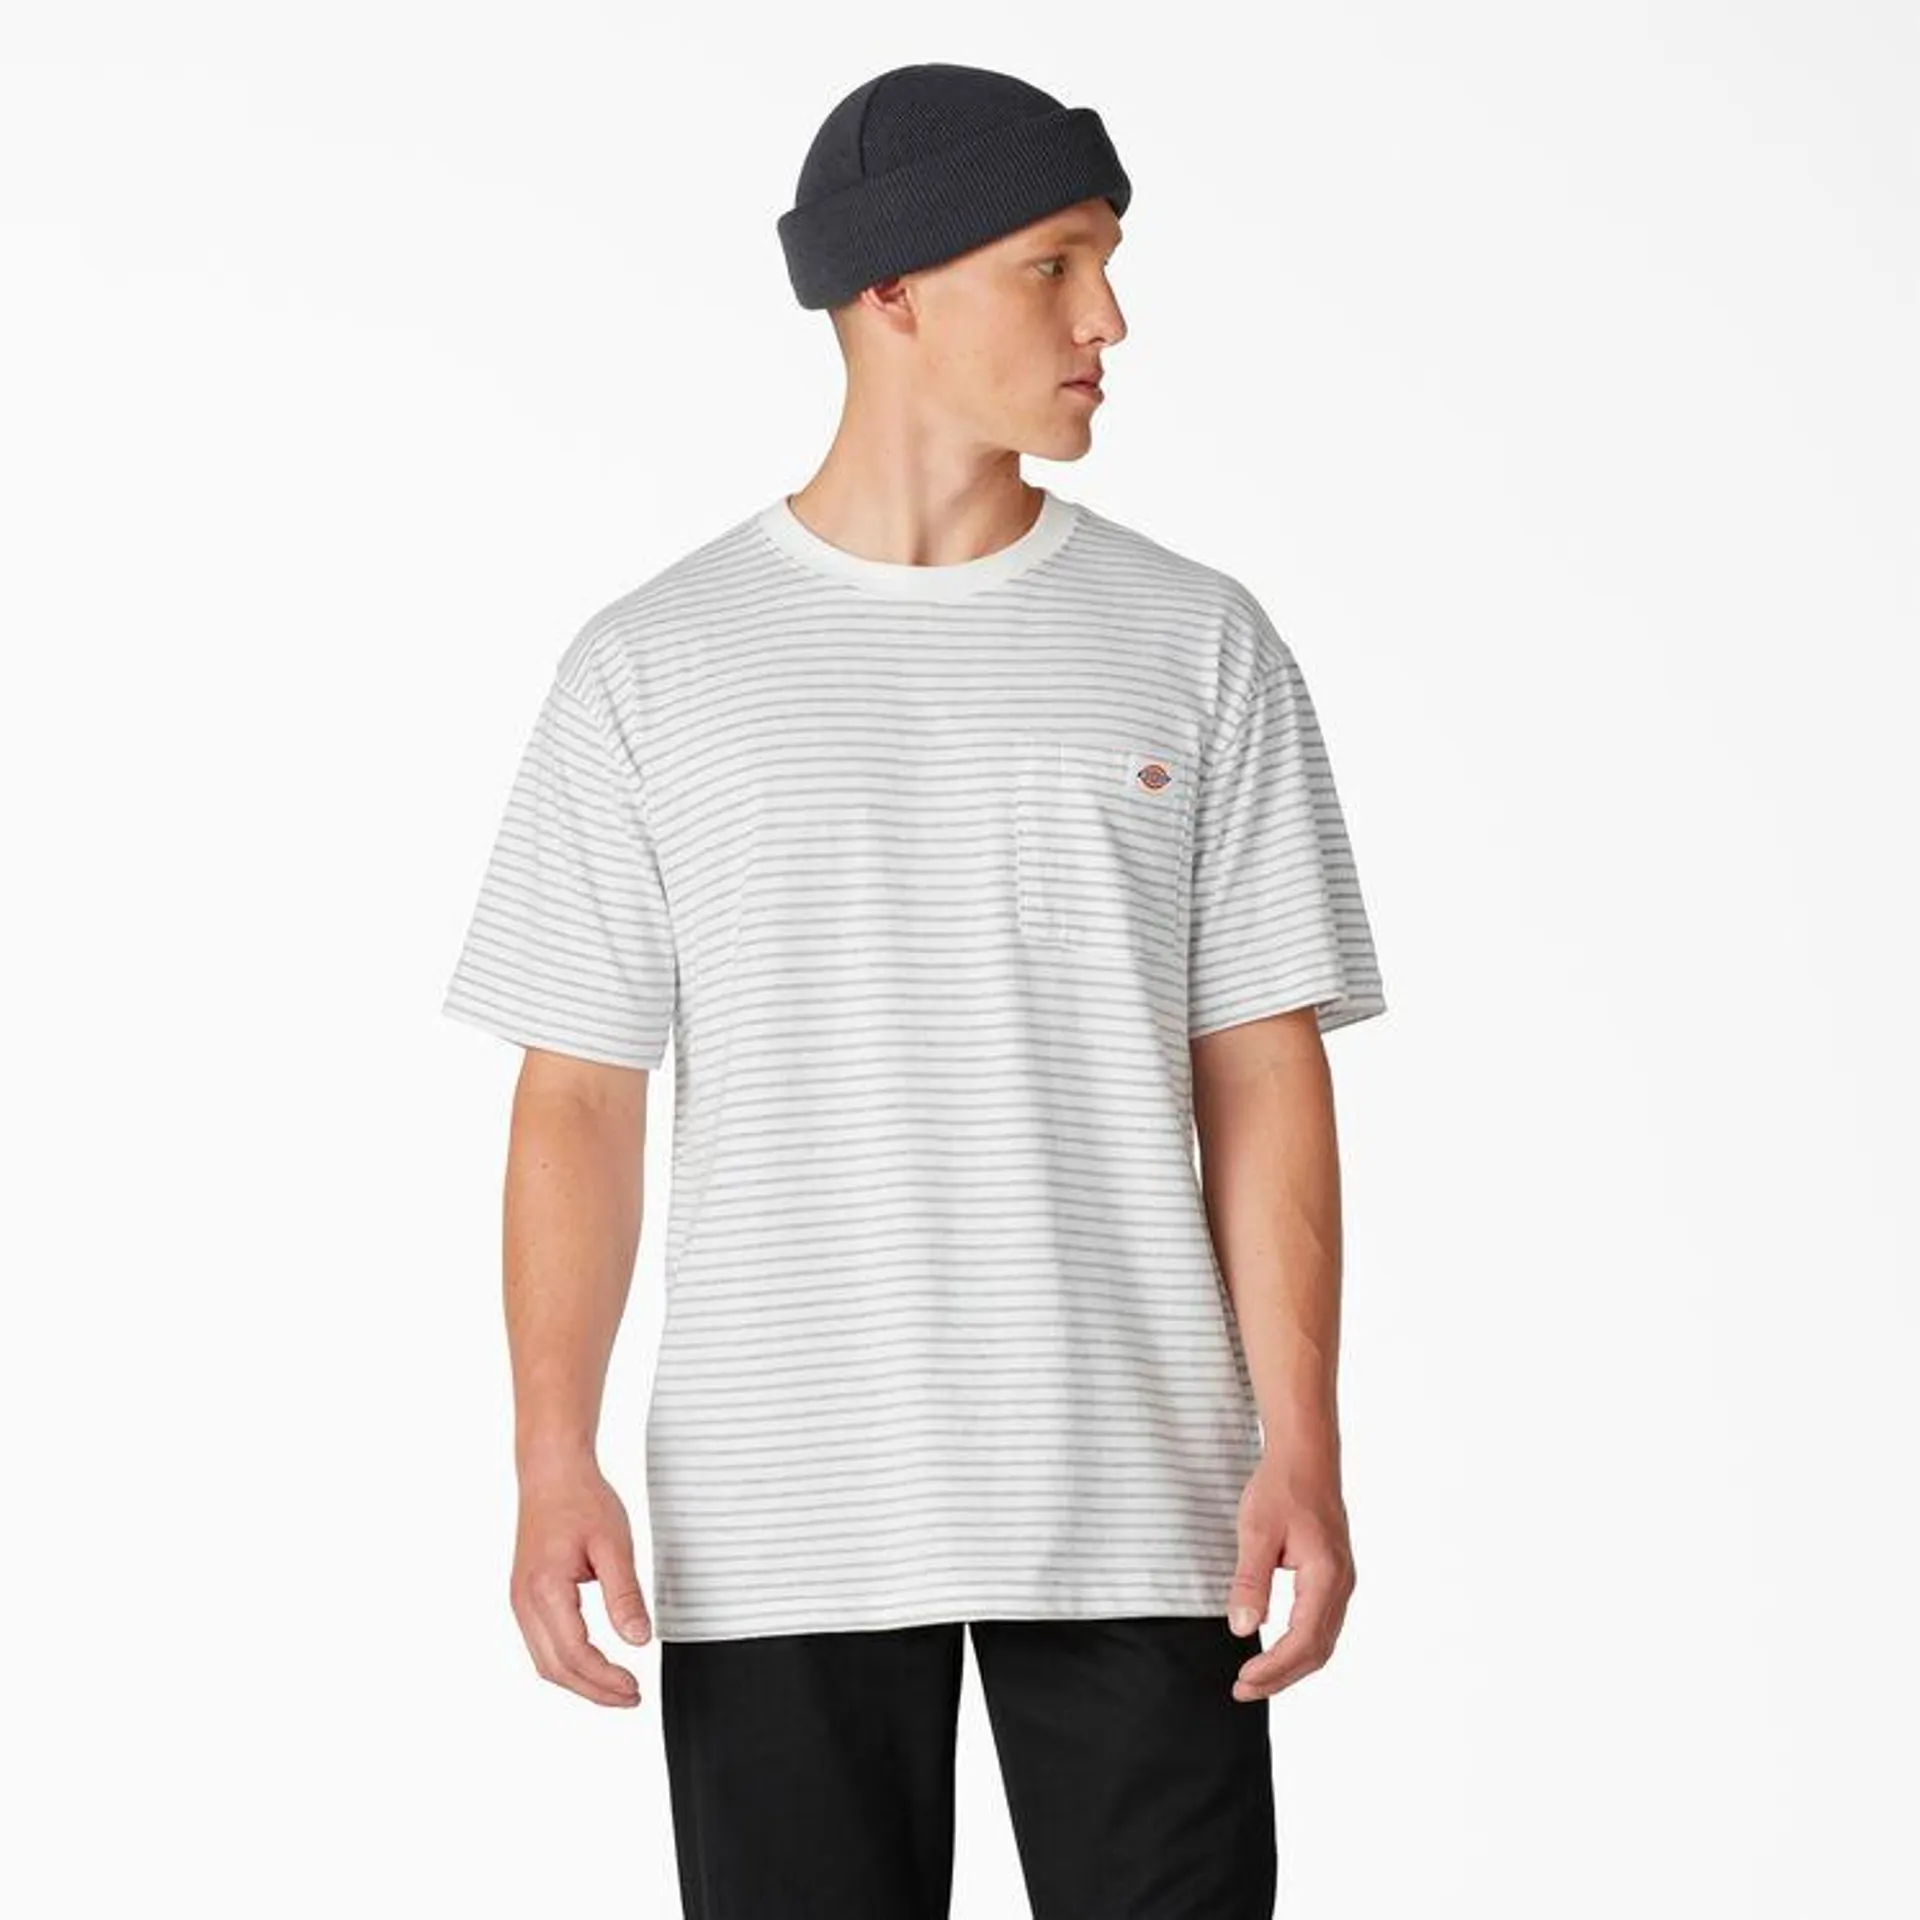 Regular Fit Striped Pocket T-Shirt, White Heather Stripe